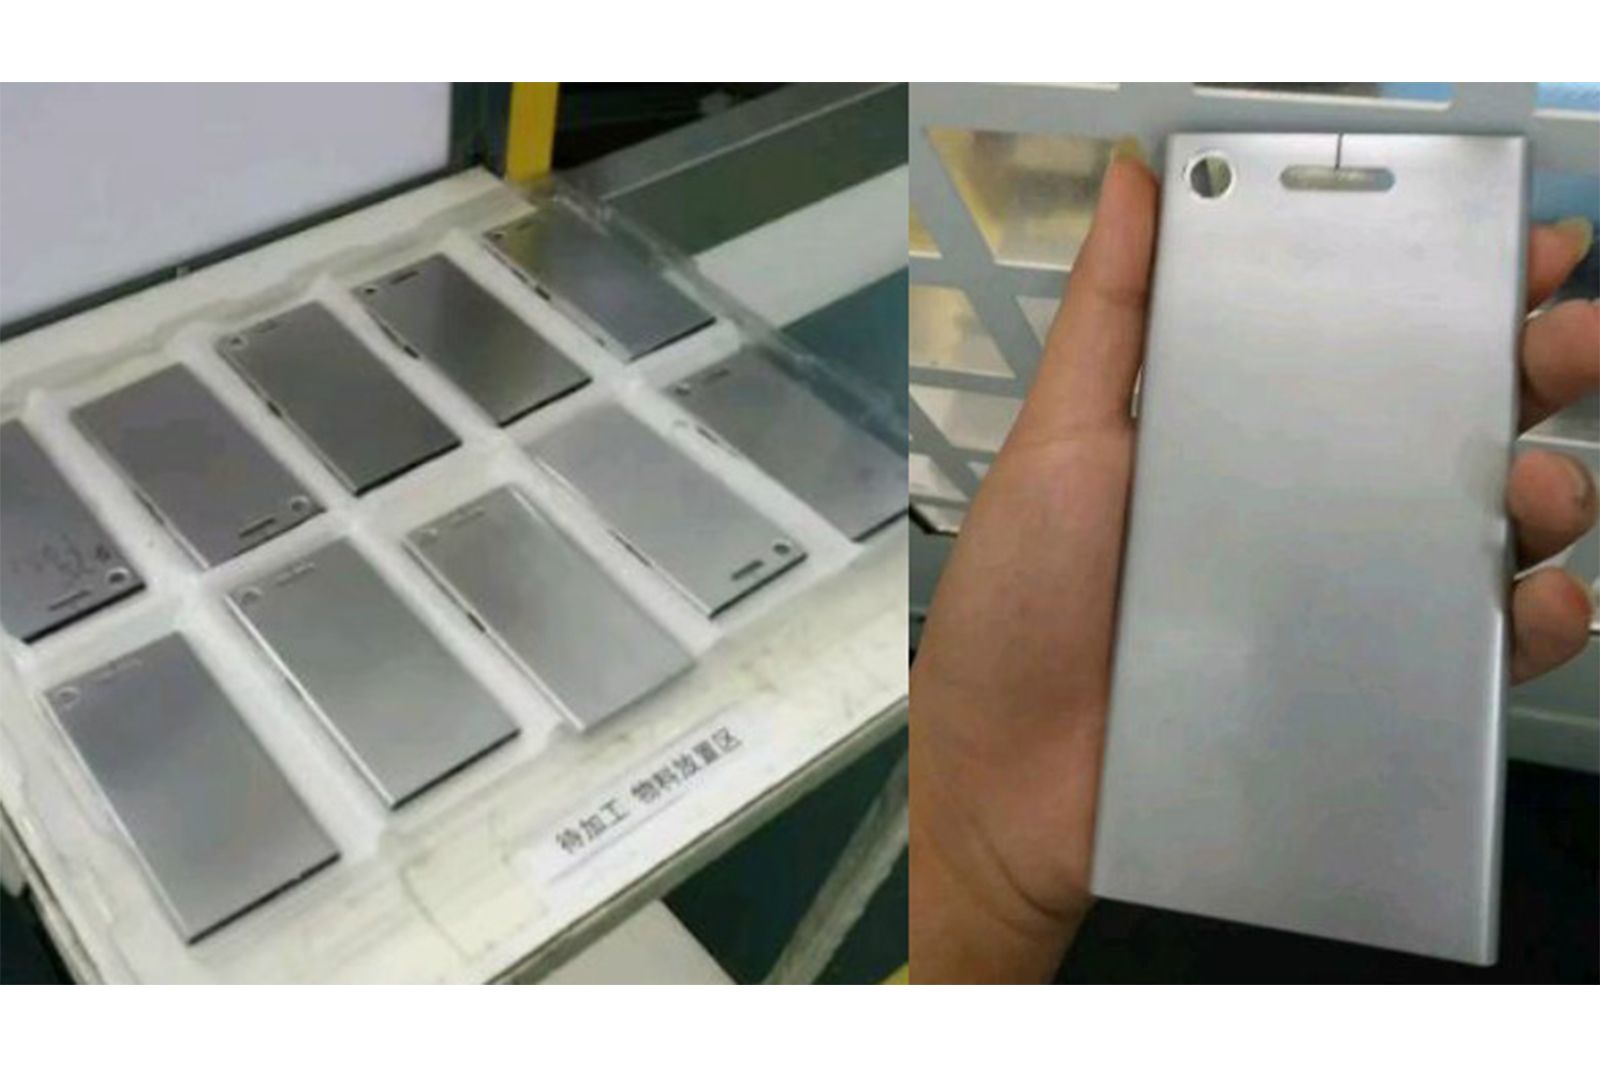 Sony Xperia XZ1 rear shell and specs leaked image 1